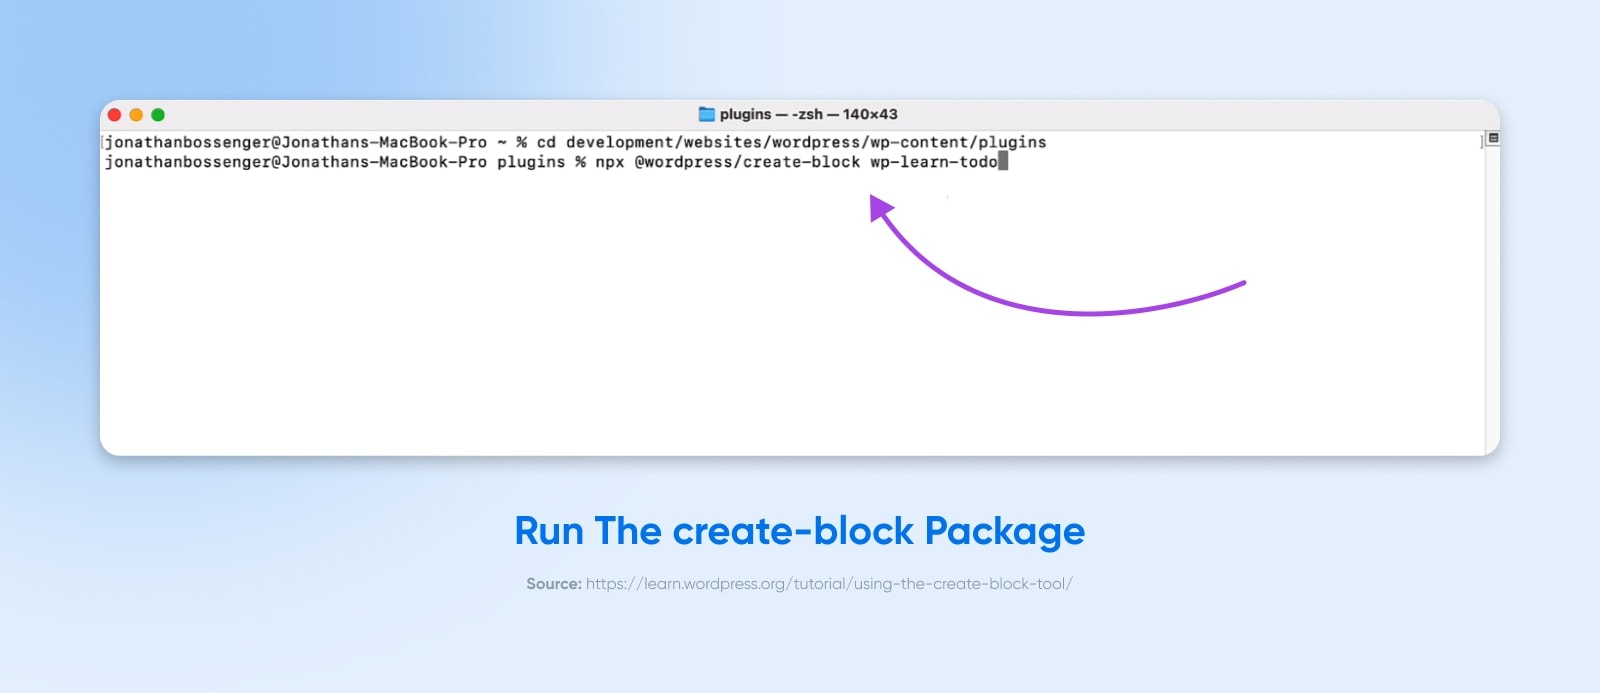 Run the create-block Package